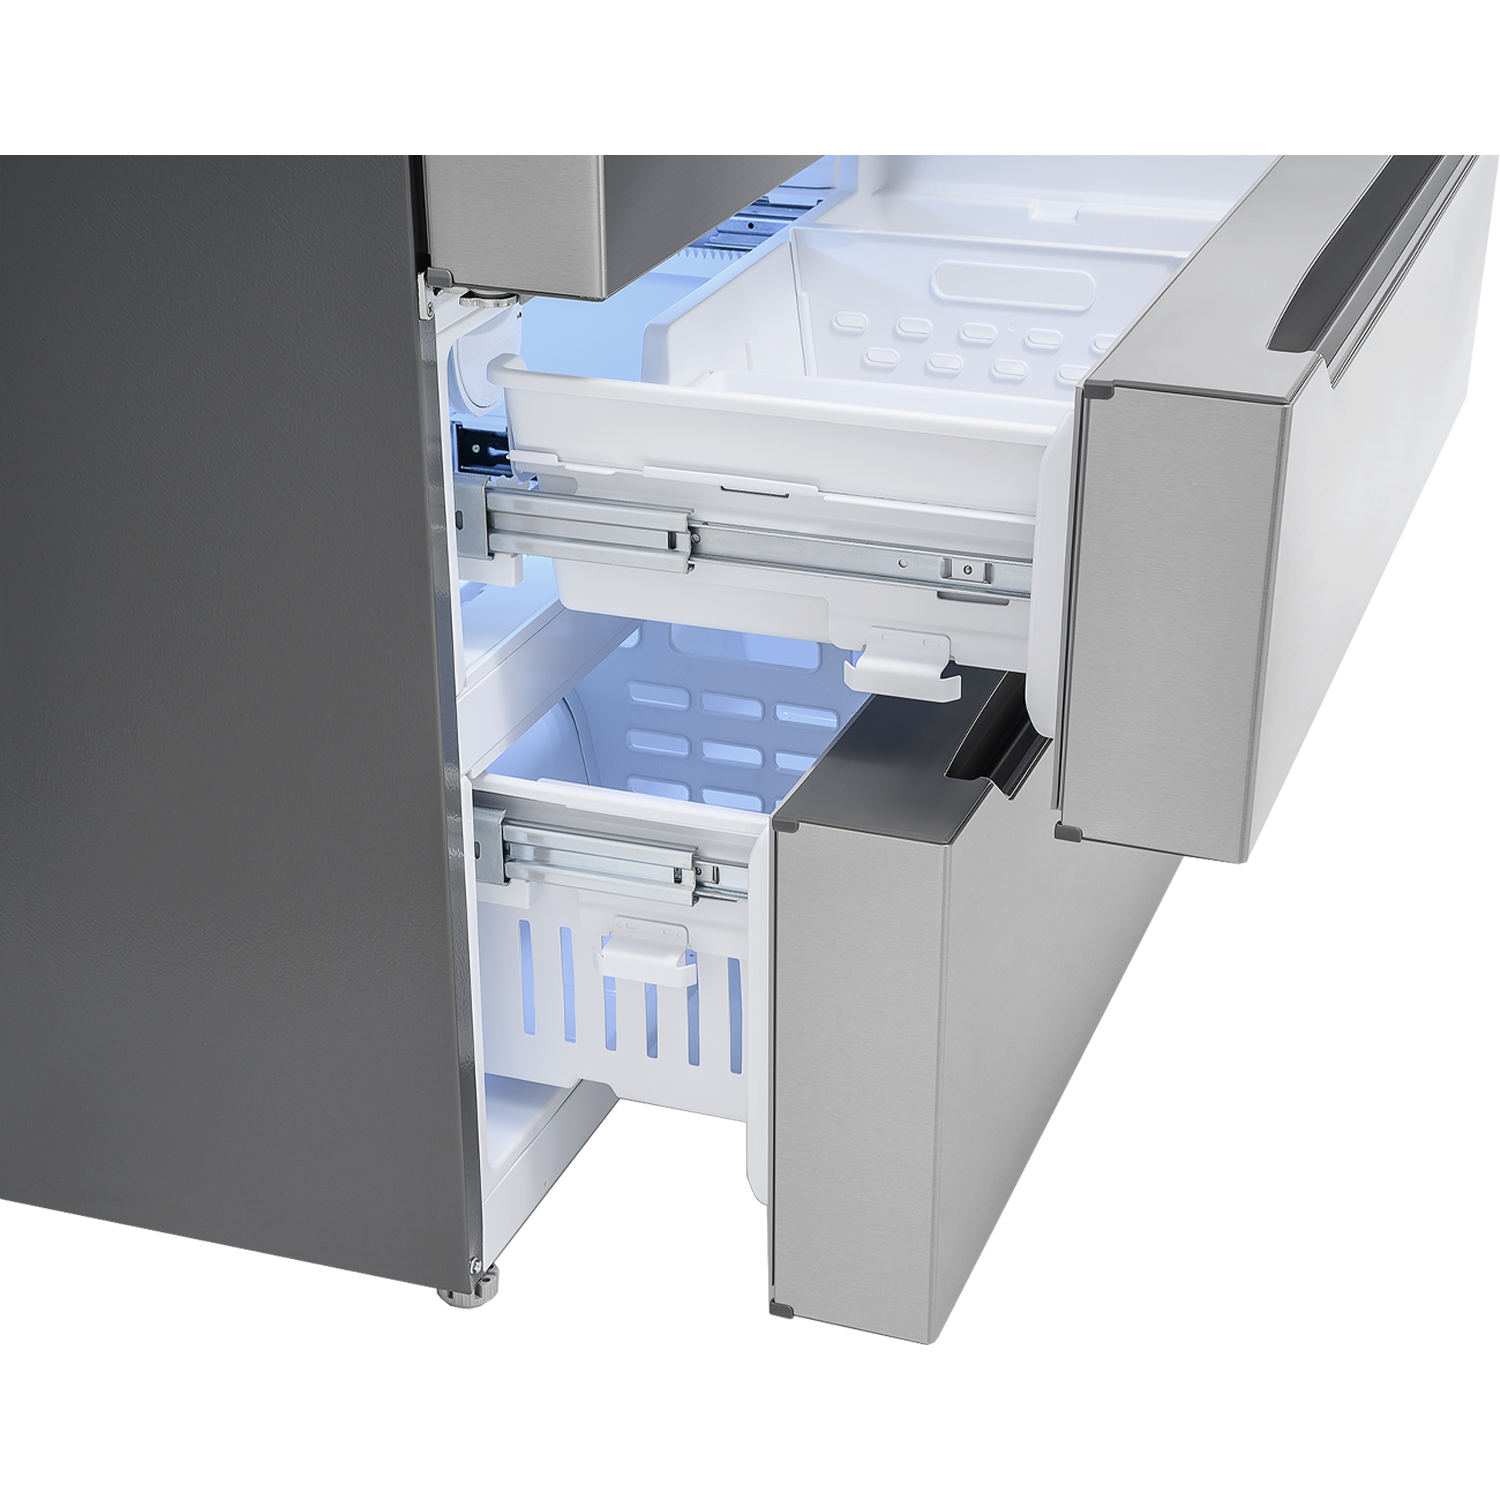 refrigerador-frenchdoor-bertazzoni-professional-91cm-636l-corredica